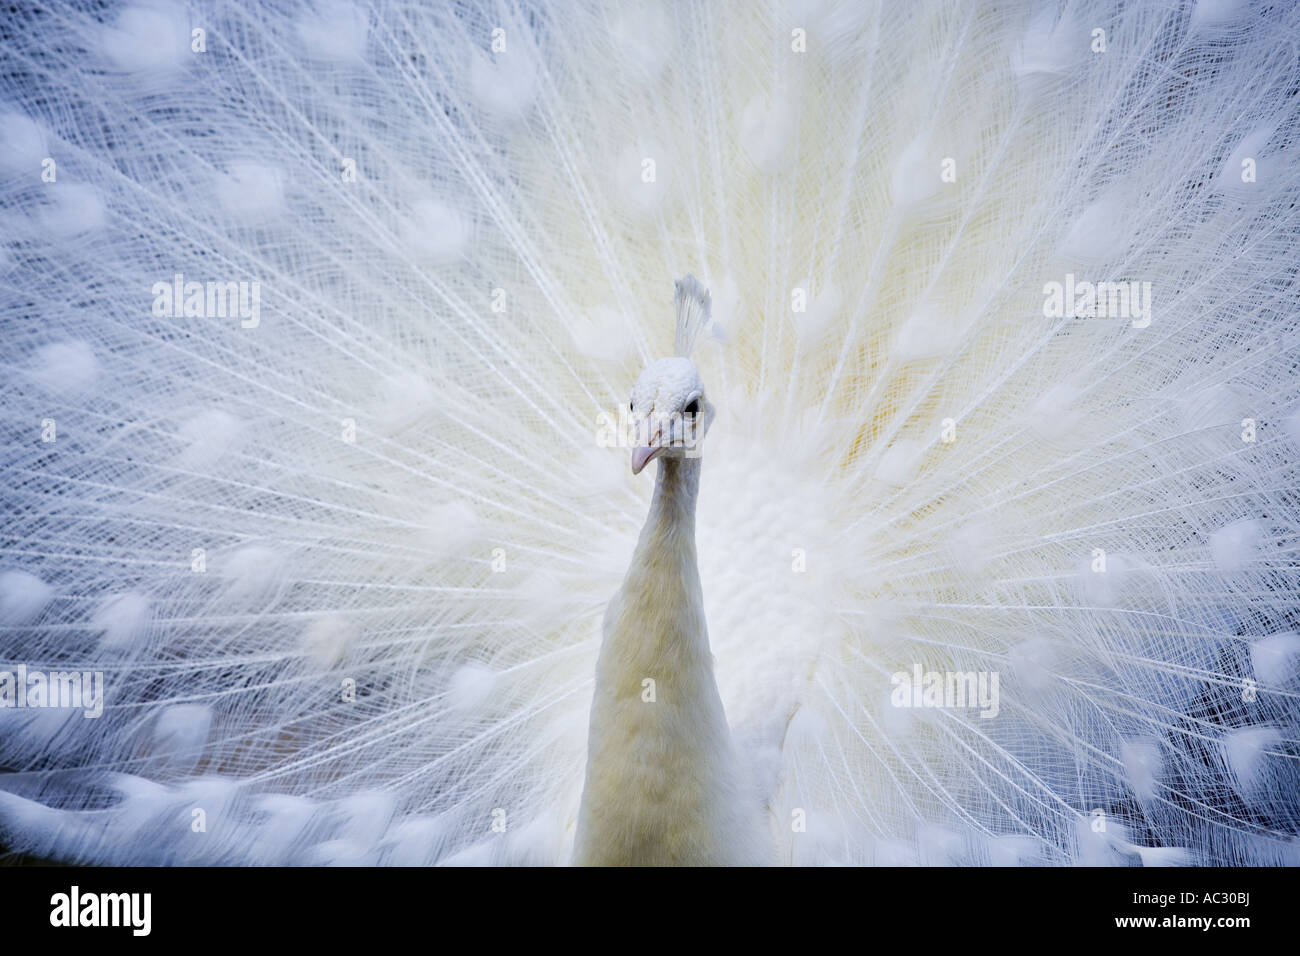 Albino peacock afficher Banque D'Images